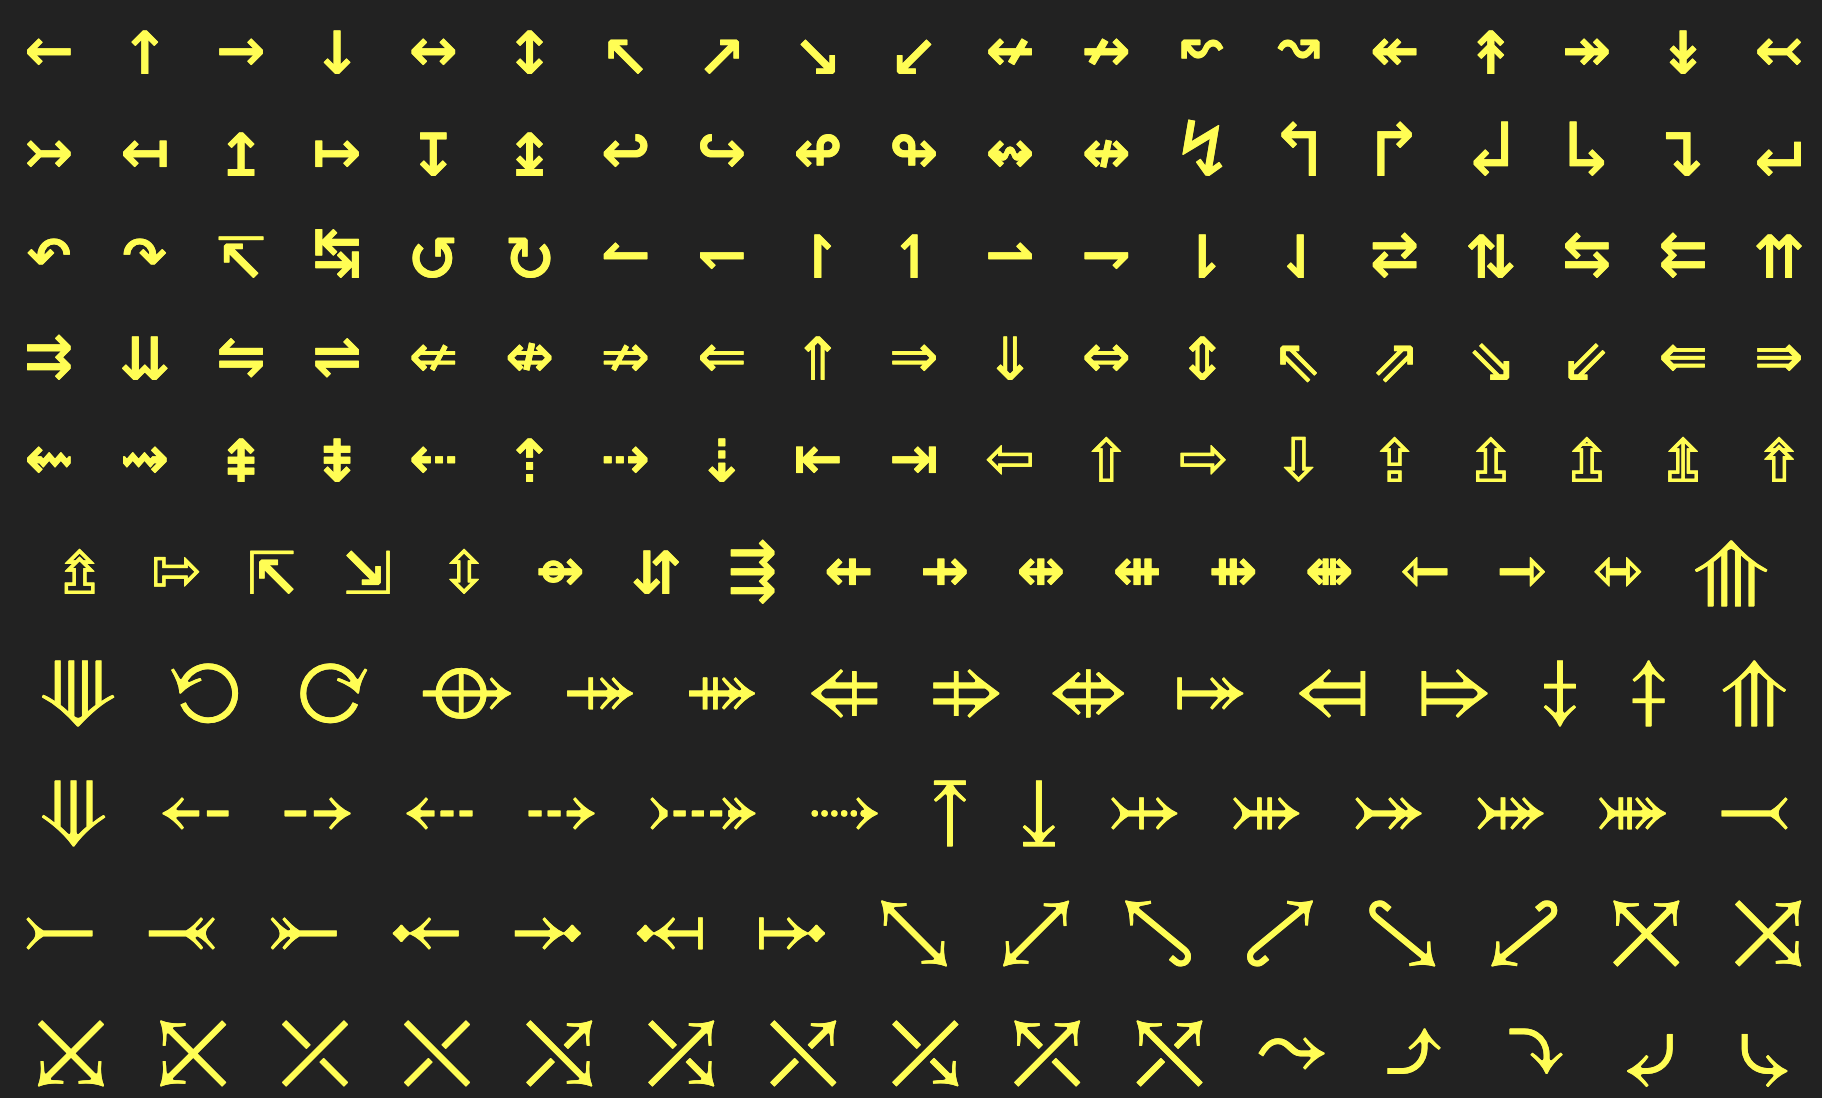 Unicode Arrow Symbols | Hot Sex Picture